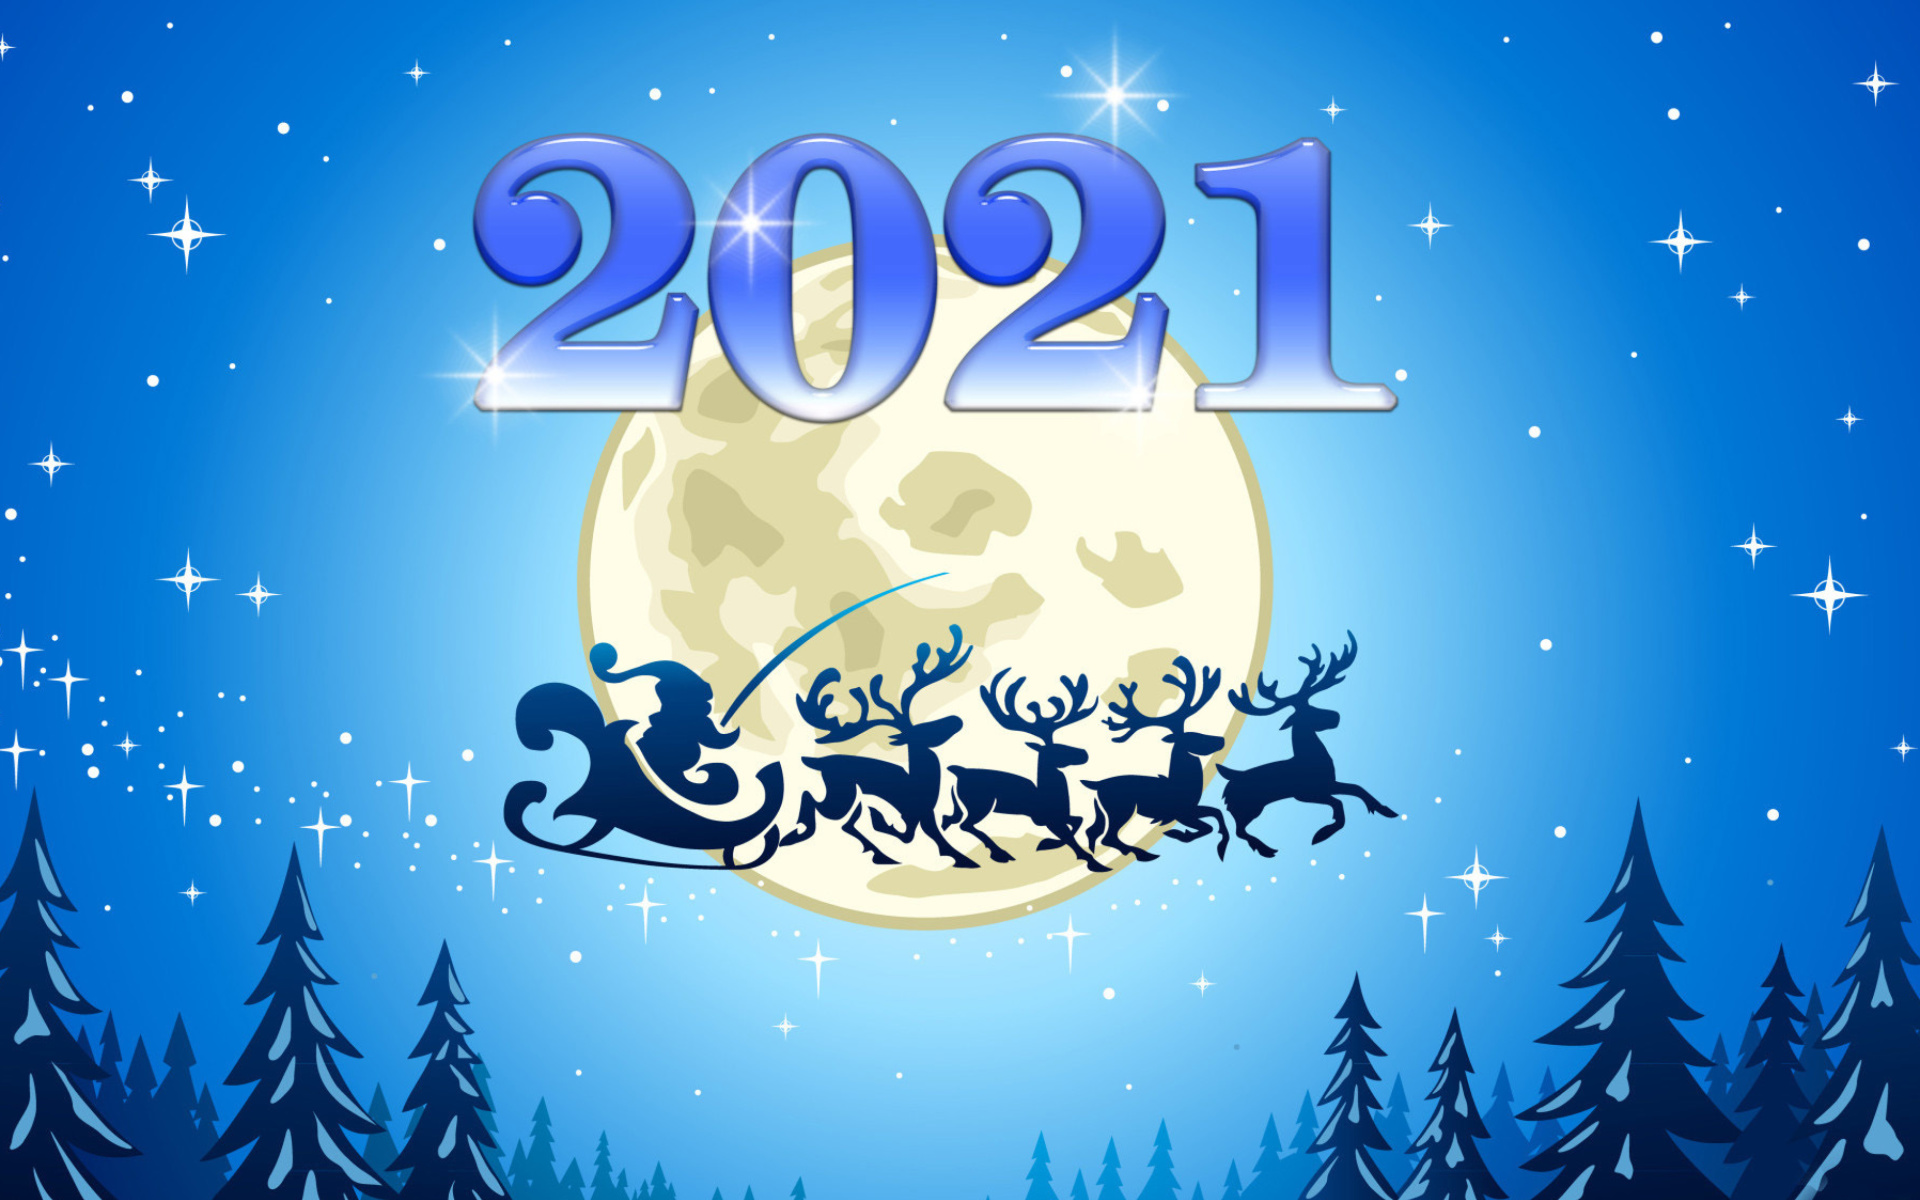 2021 New Year Night wallpaper 1920x1200